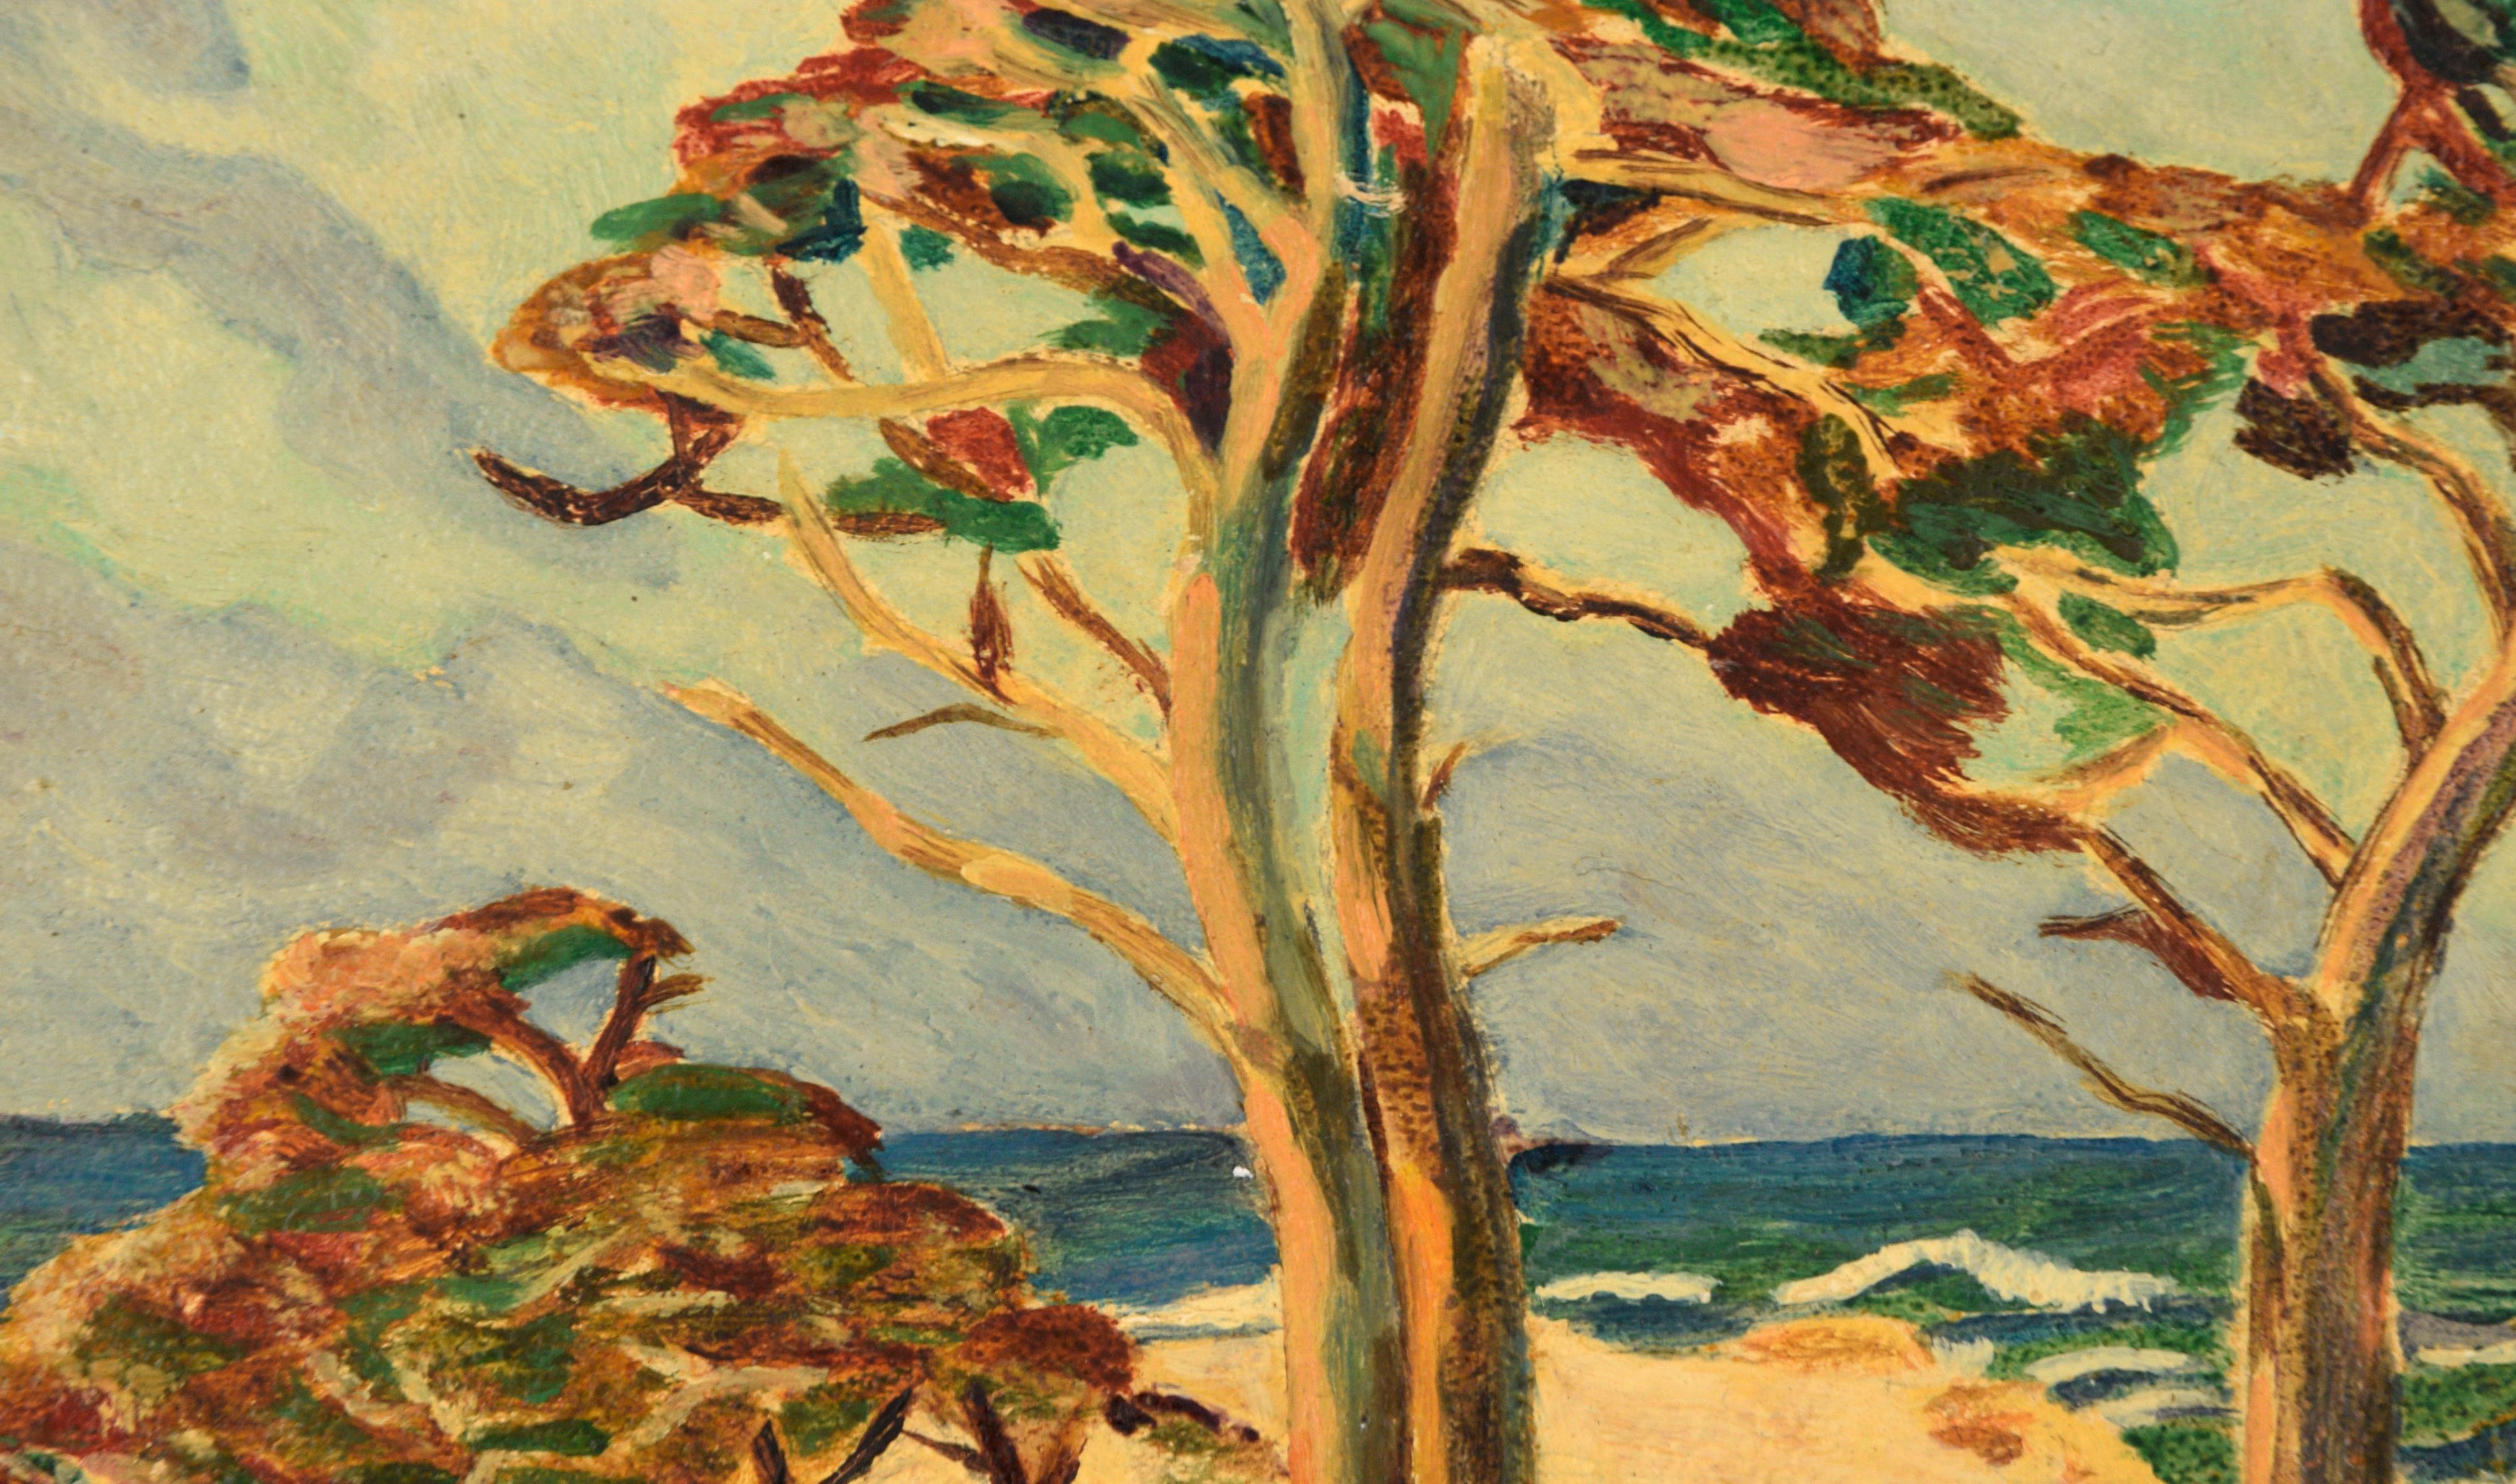 The Trees on the Coast, paysage marin du milieu du siècle - Painting de Unknown